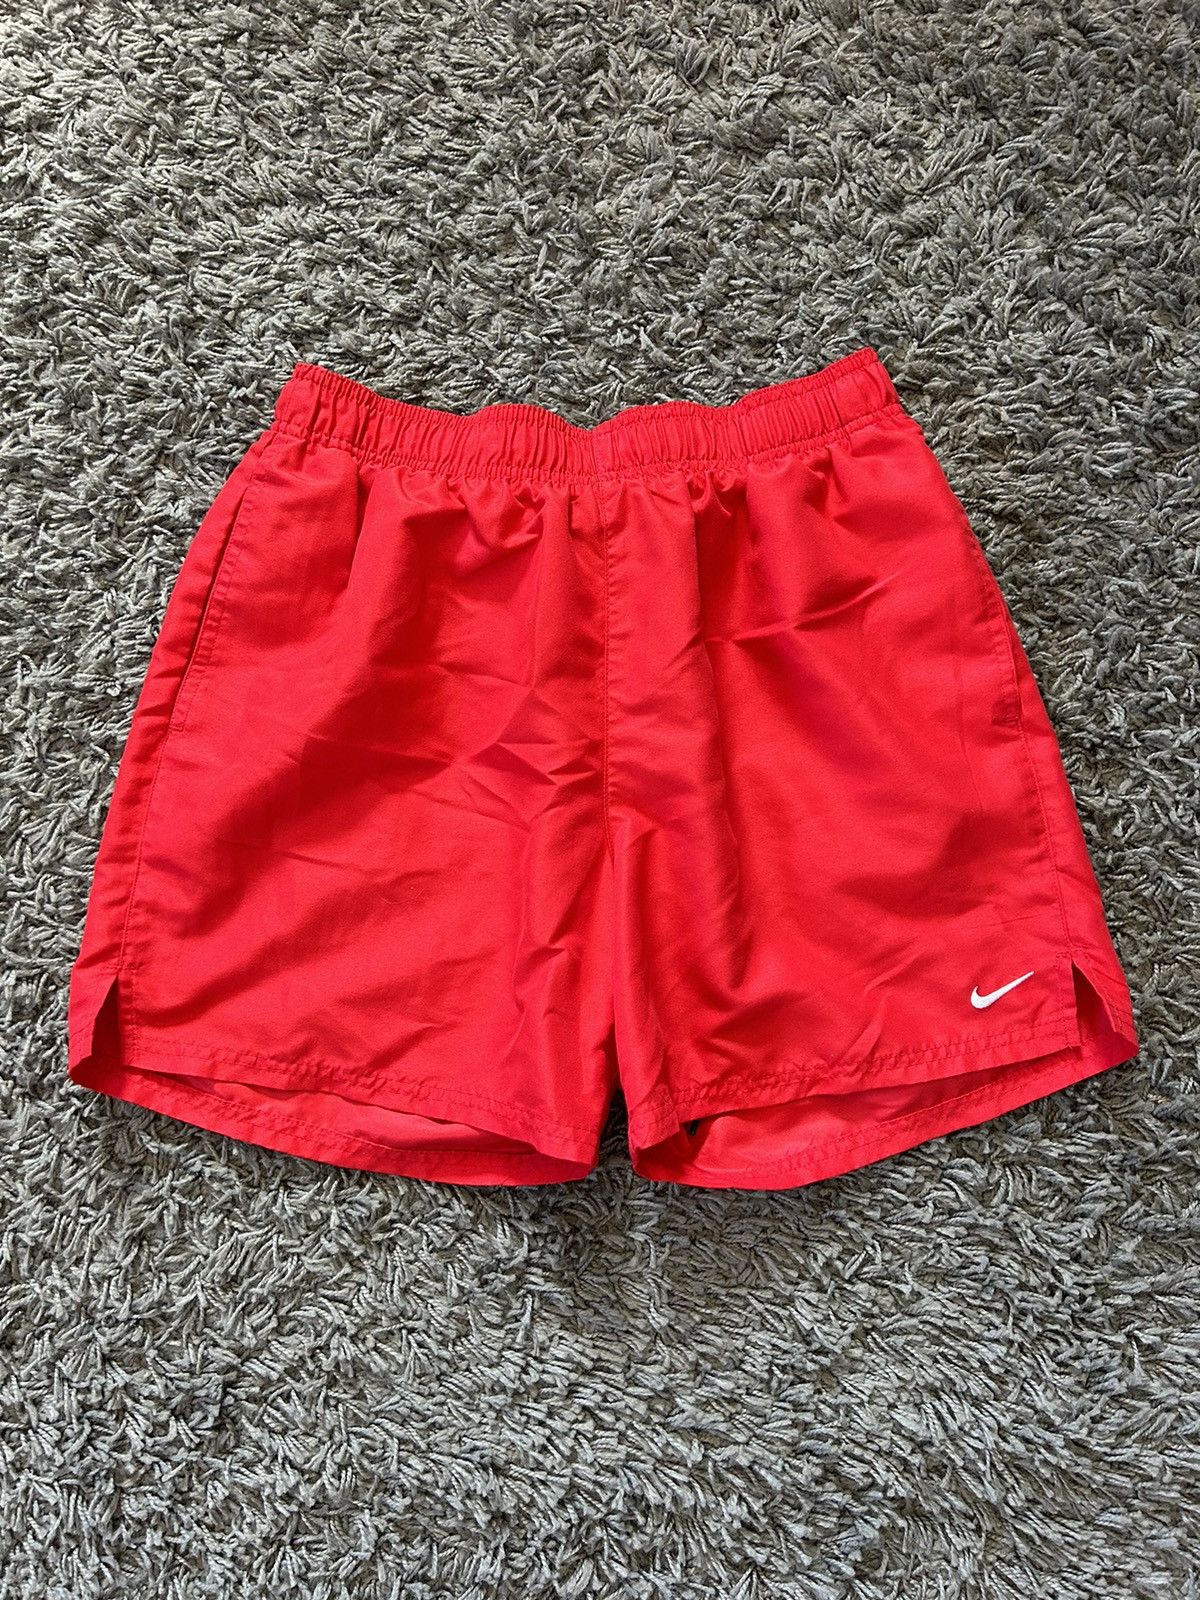 Nike Nike Swim Shorts | Grailed